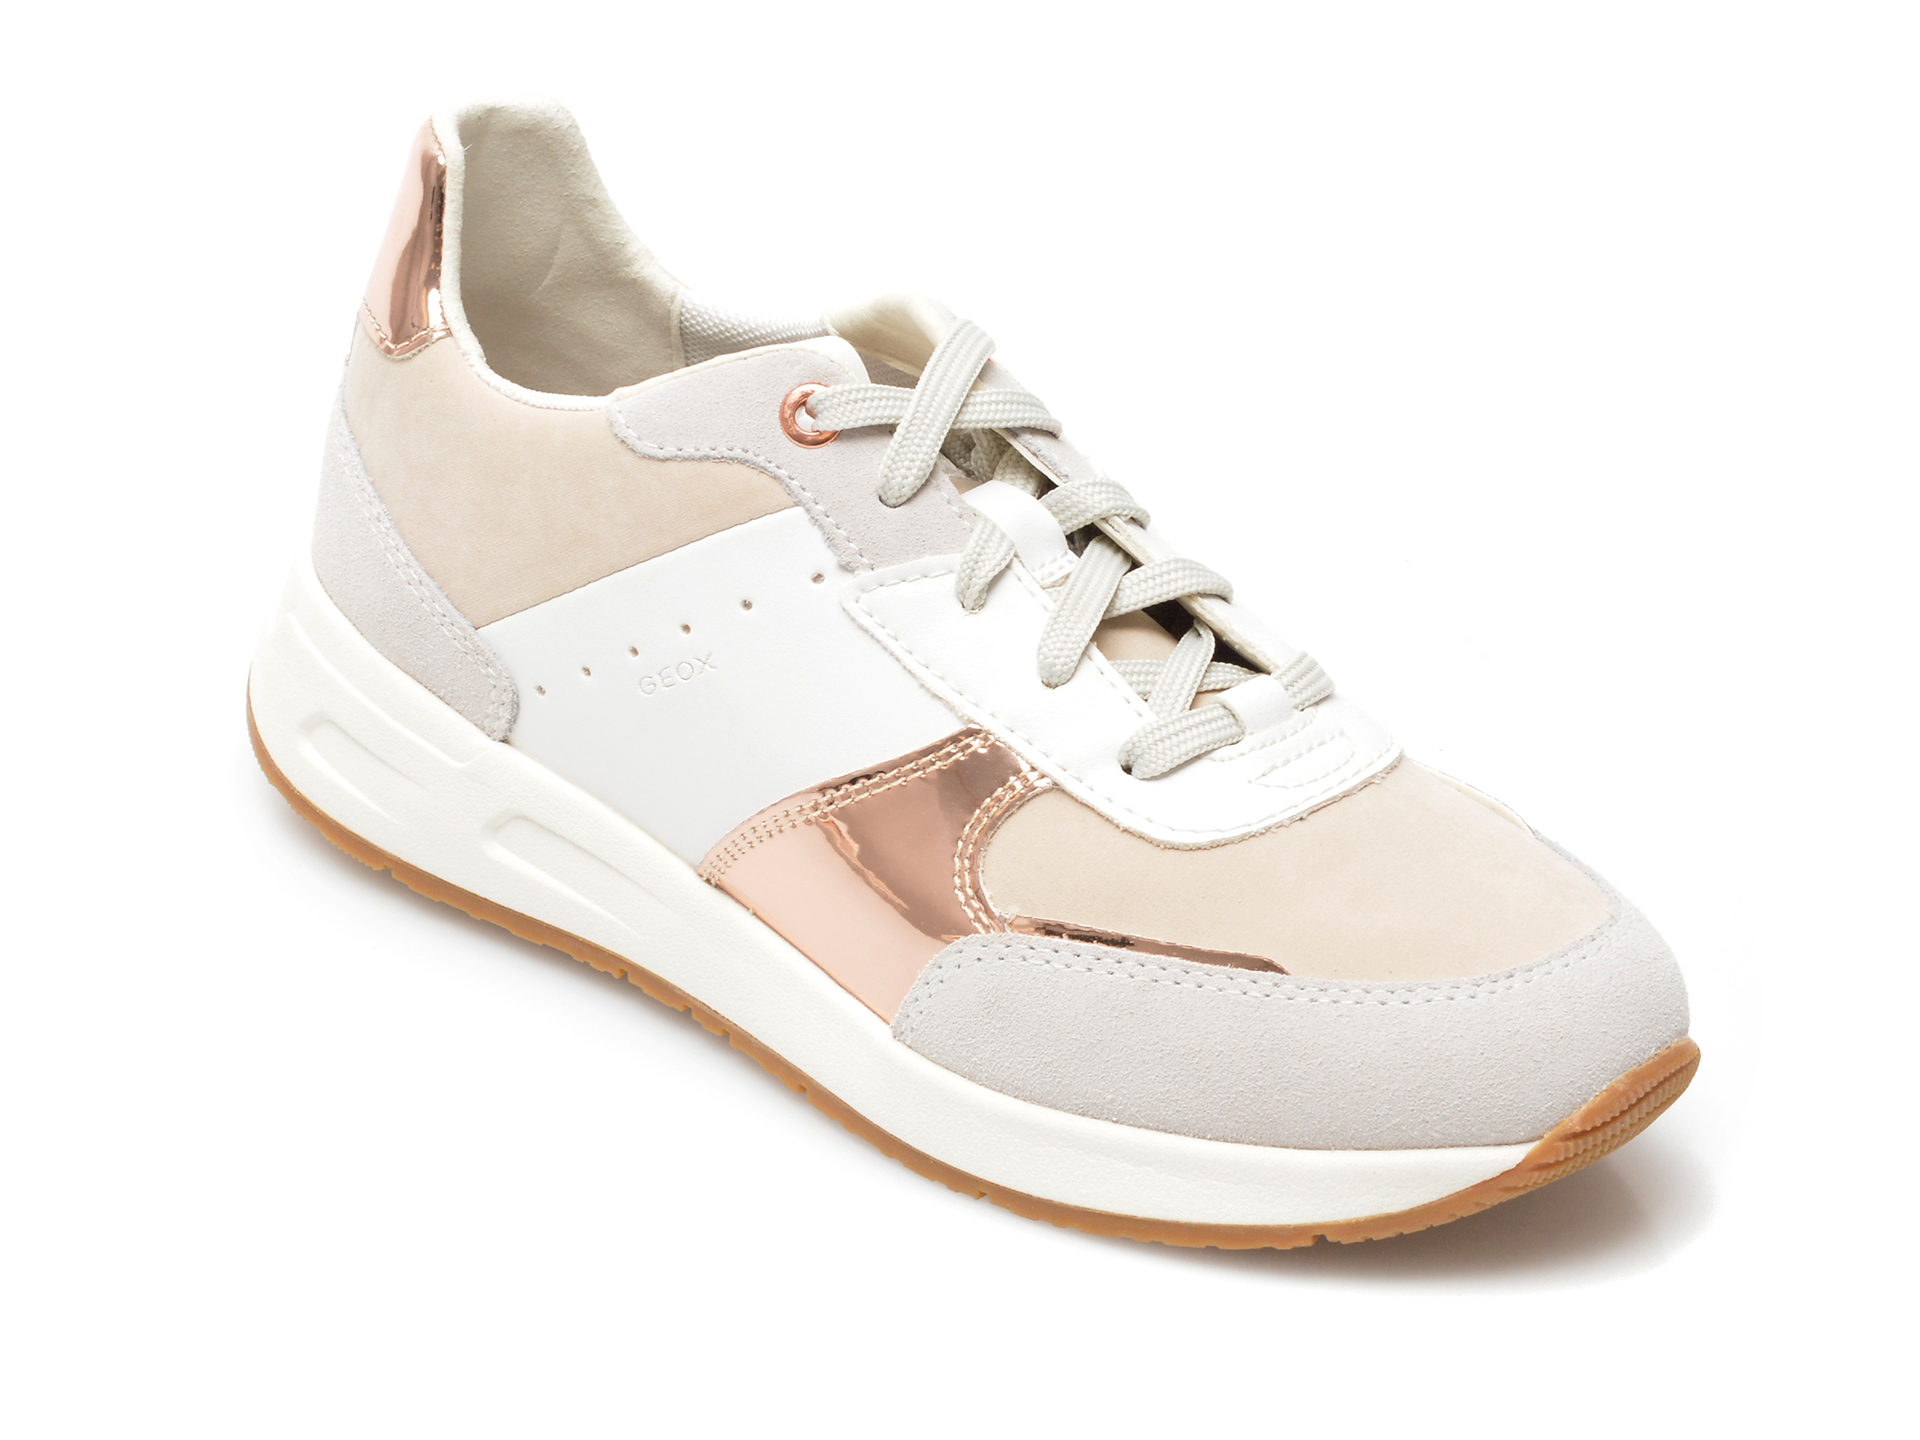 Pantofi sport GEOX albi, D25NQA, din material textil si piele naturala Geox